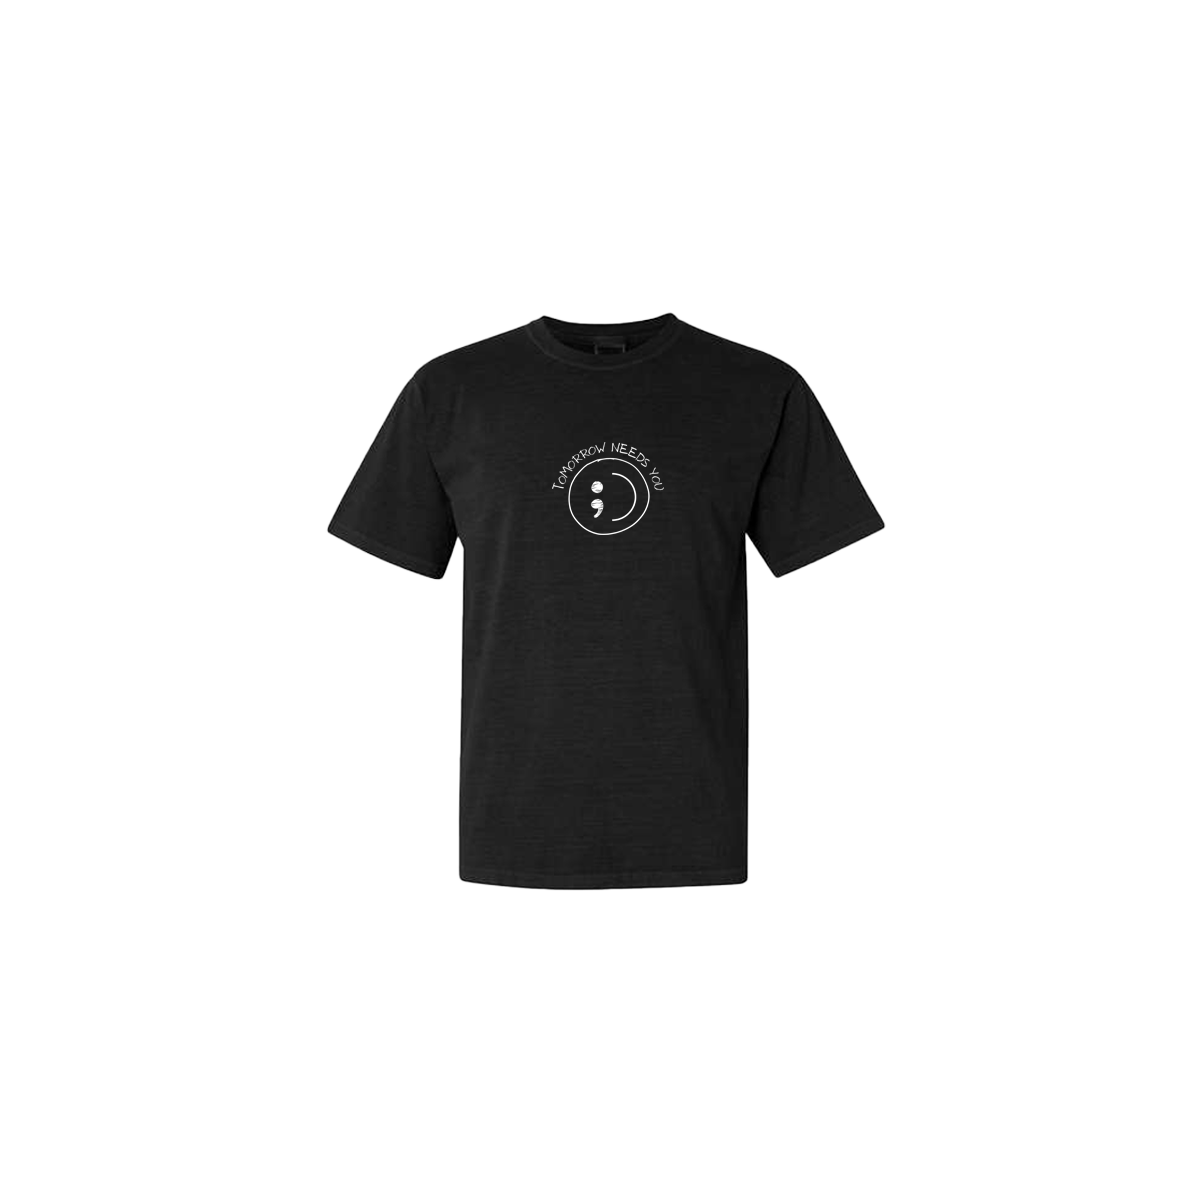 Tomorrow Needs You Embroidered Black Tshirt - Mental Health Awareness Clothing